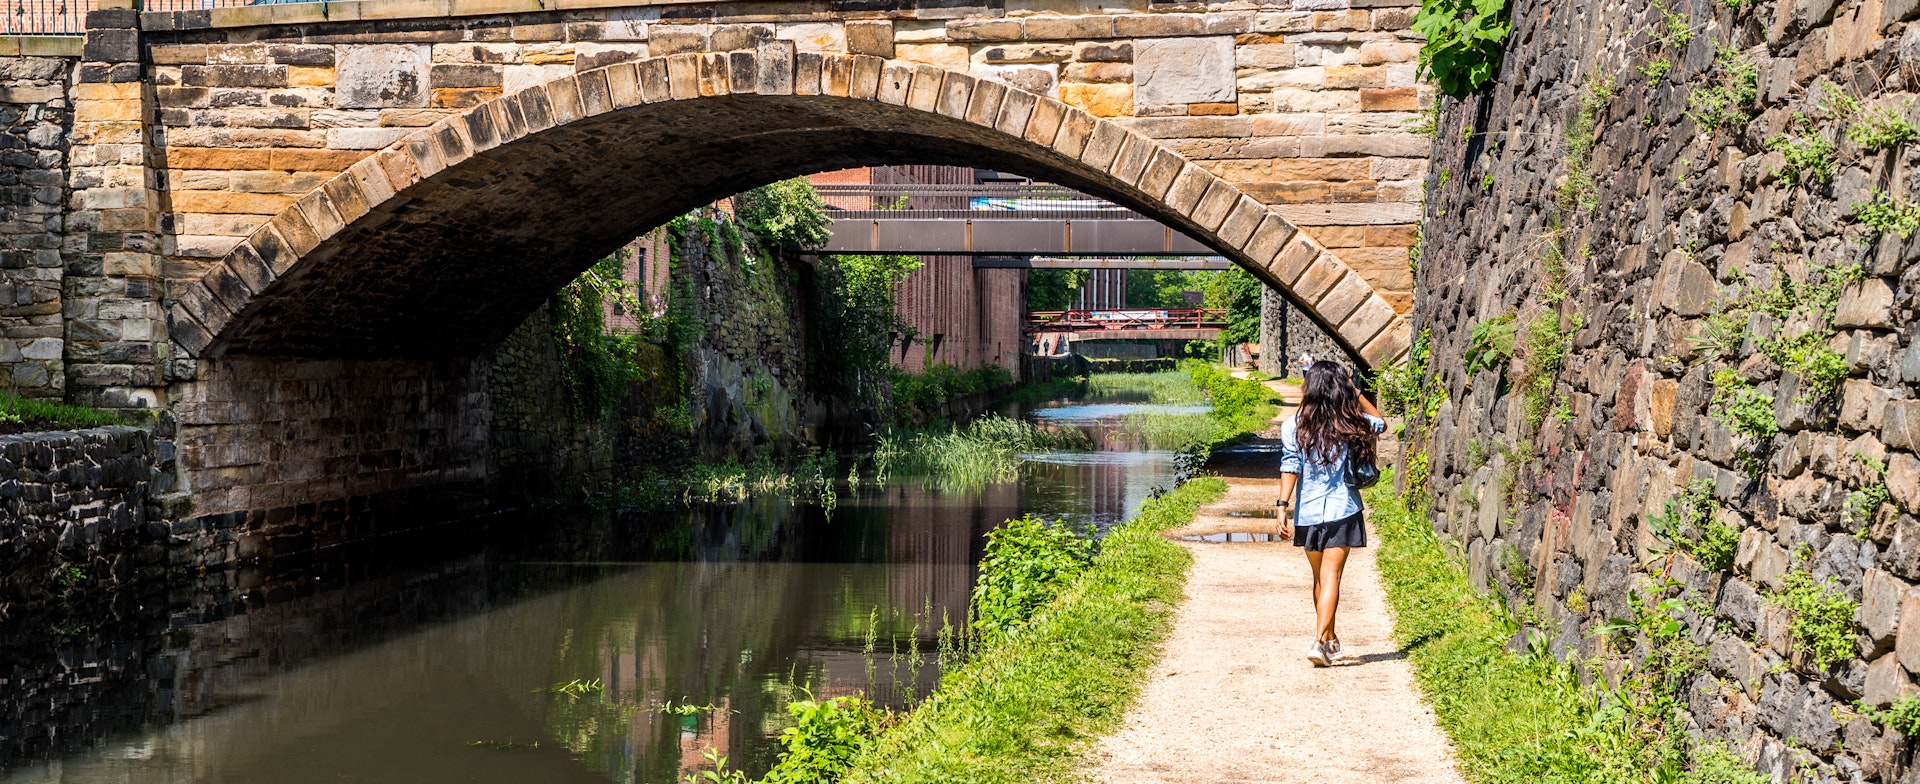 The back of a woman as she follows a tow path alongside a canal approaching a stone bridge on the C & O Canal near Washington DC